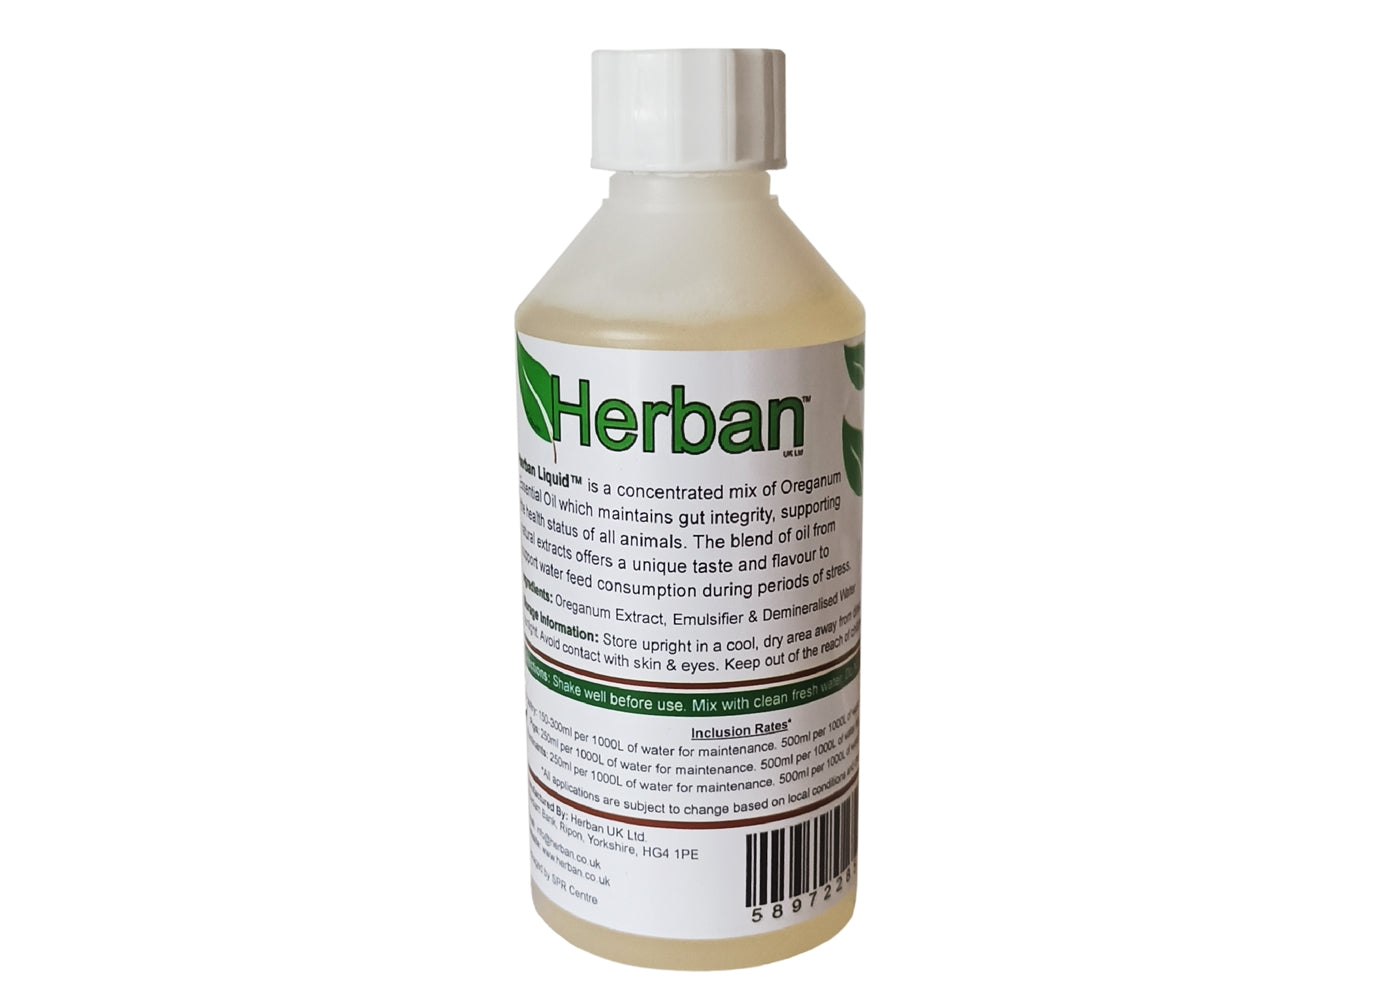 Herban Liquid for Poultry, Game Birds, Livestock & Fish - Buy Online SPR Centre UK